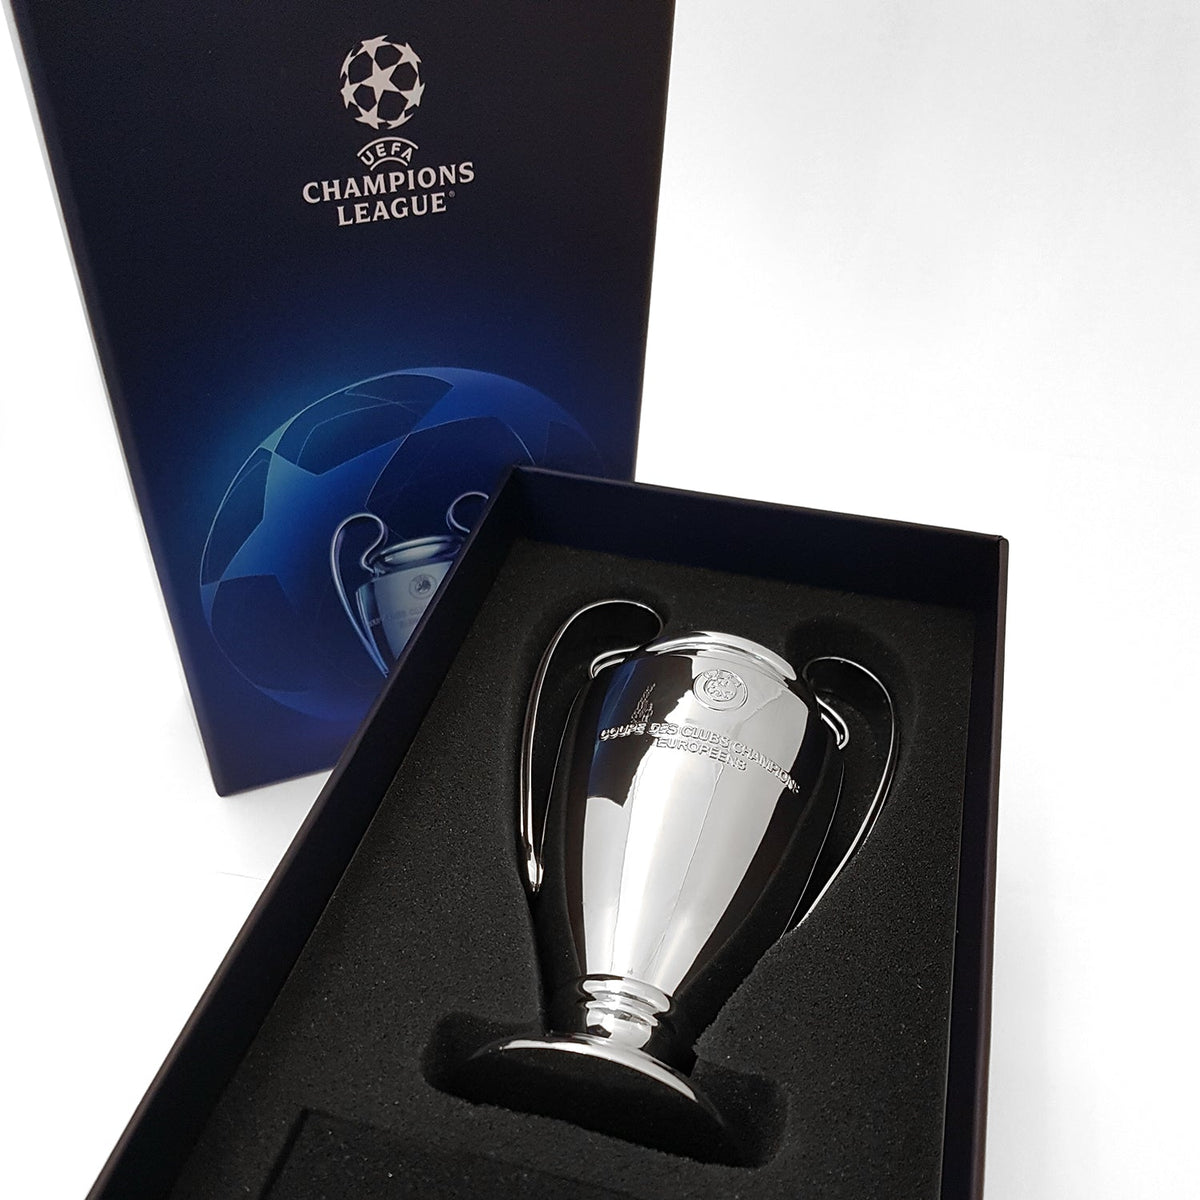 UEFA Super Cup 150mm 3D Replica Trophy UEFA Club Competitions Online Store